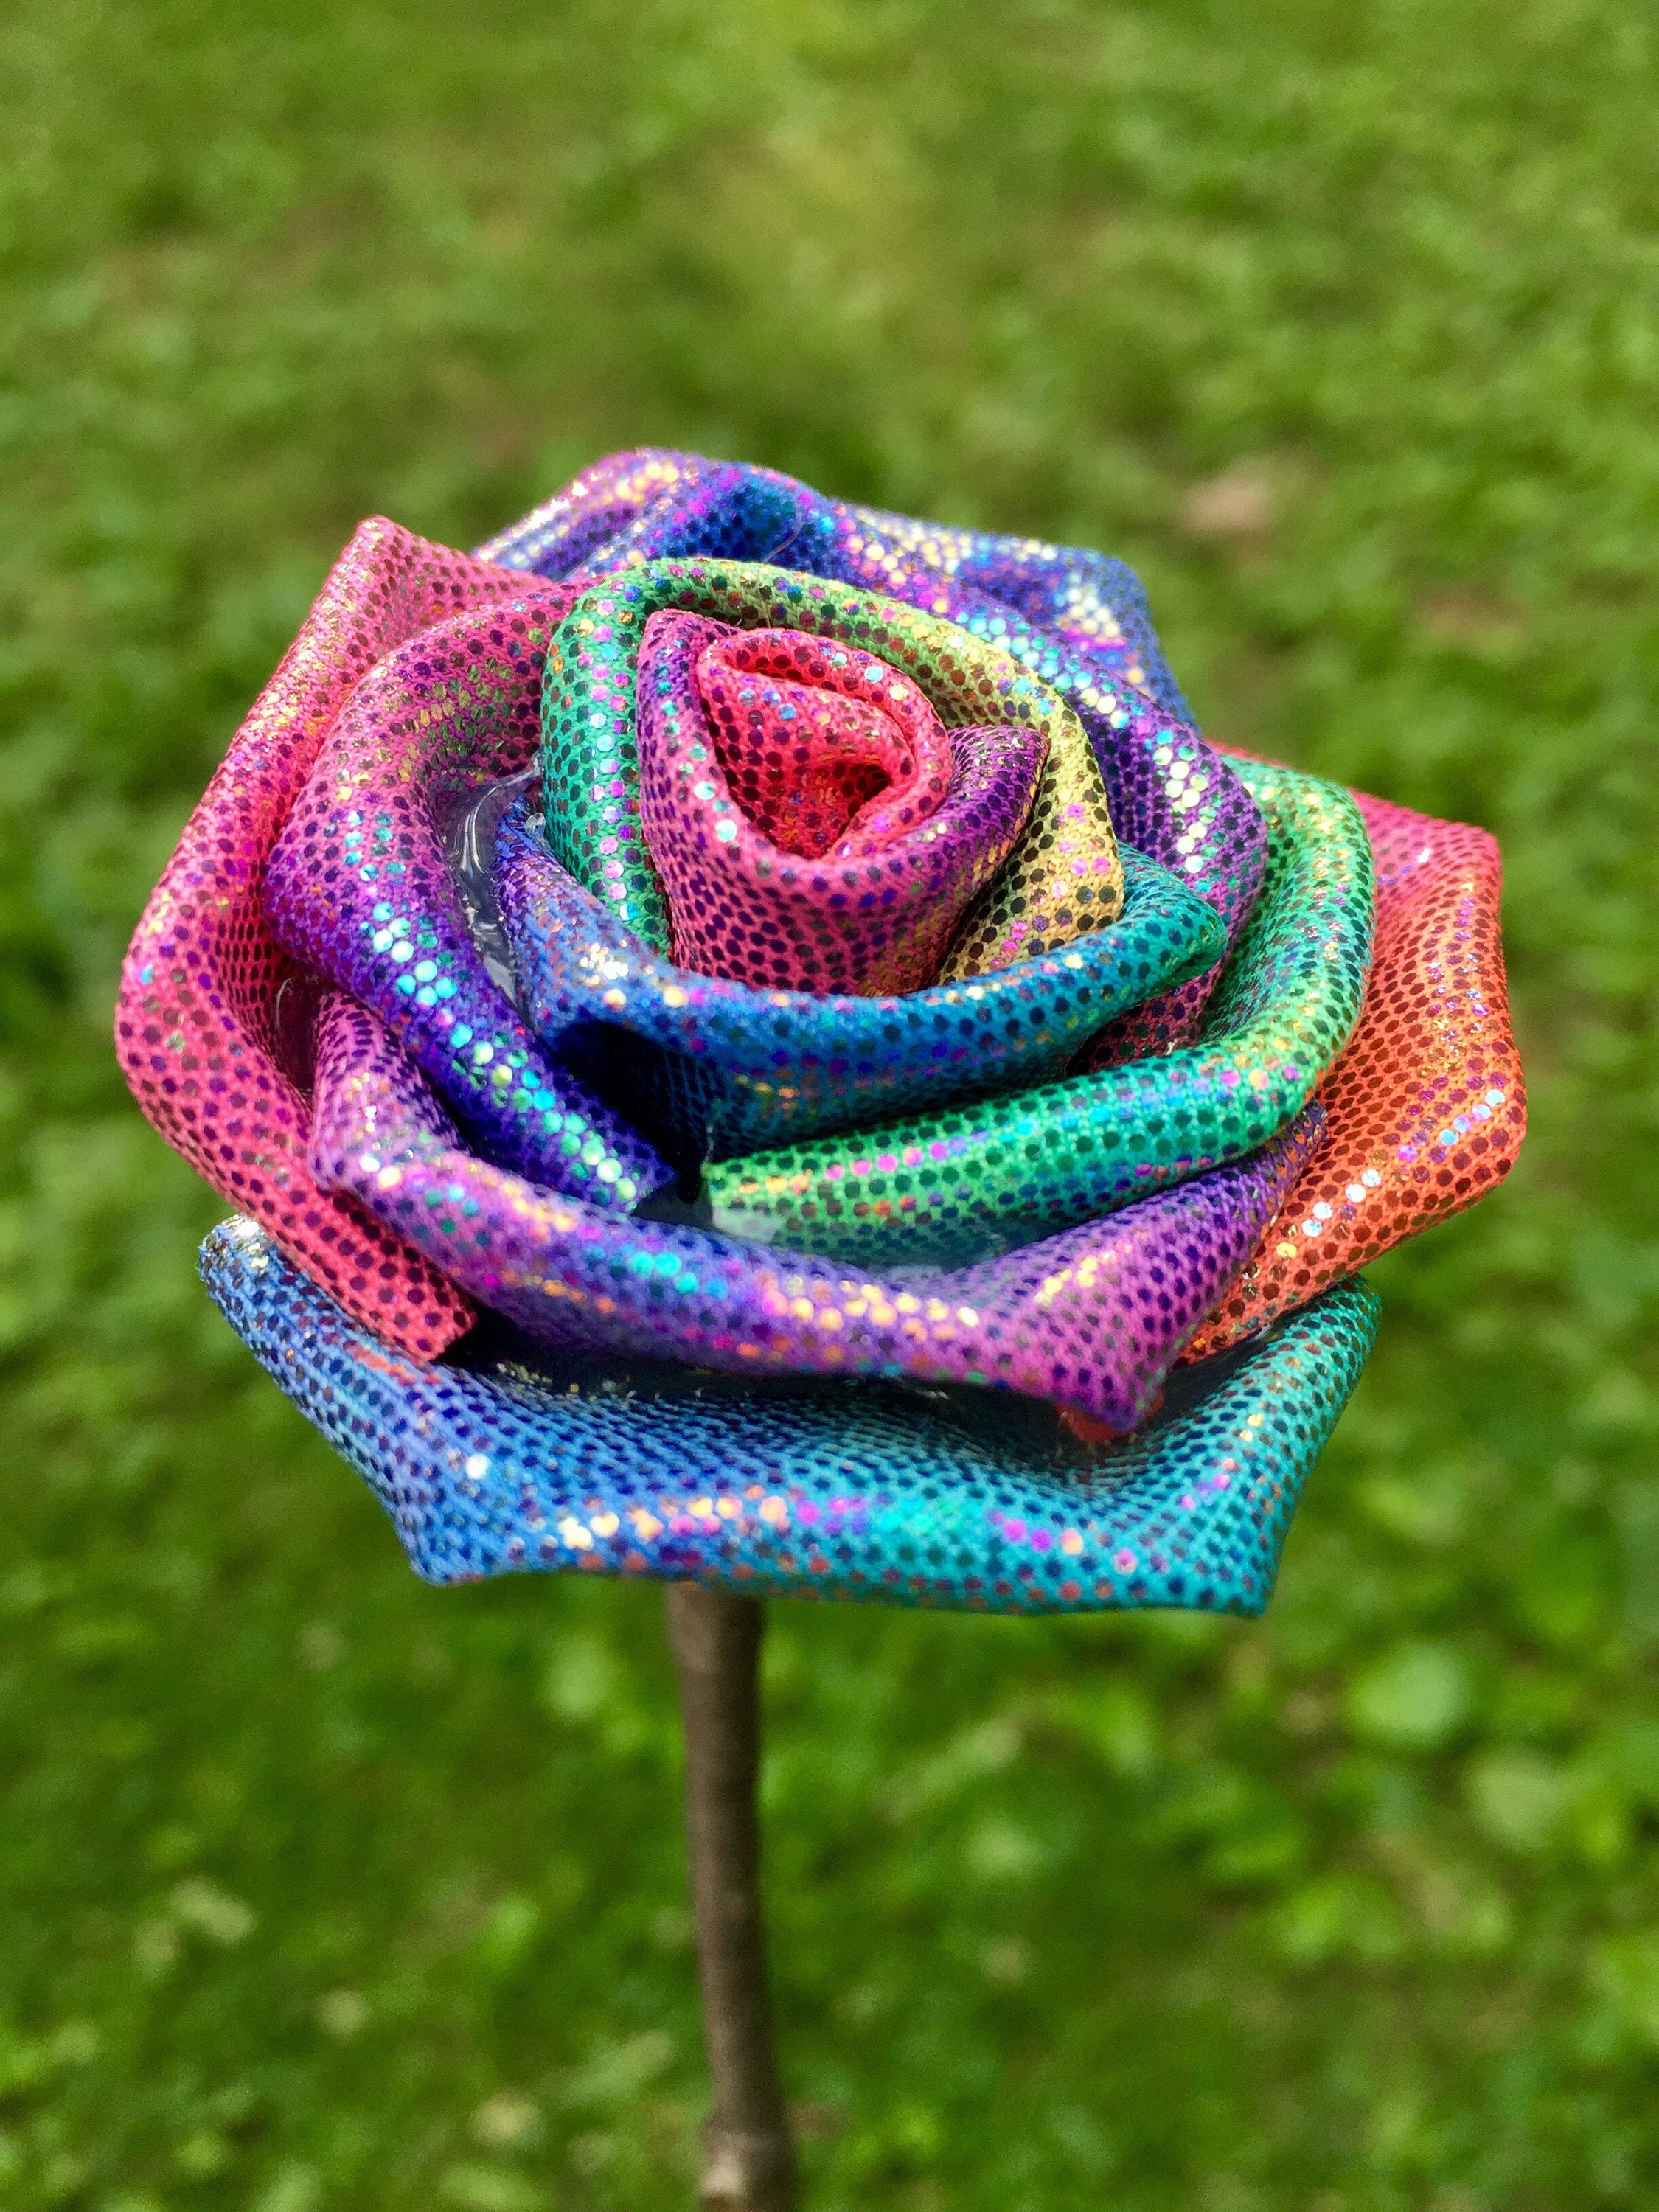 Magical Roses (Glitter Roses)